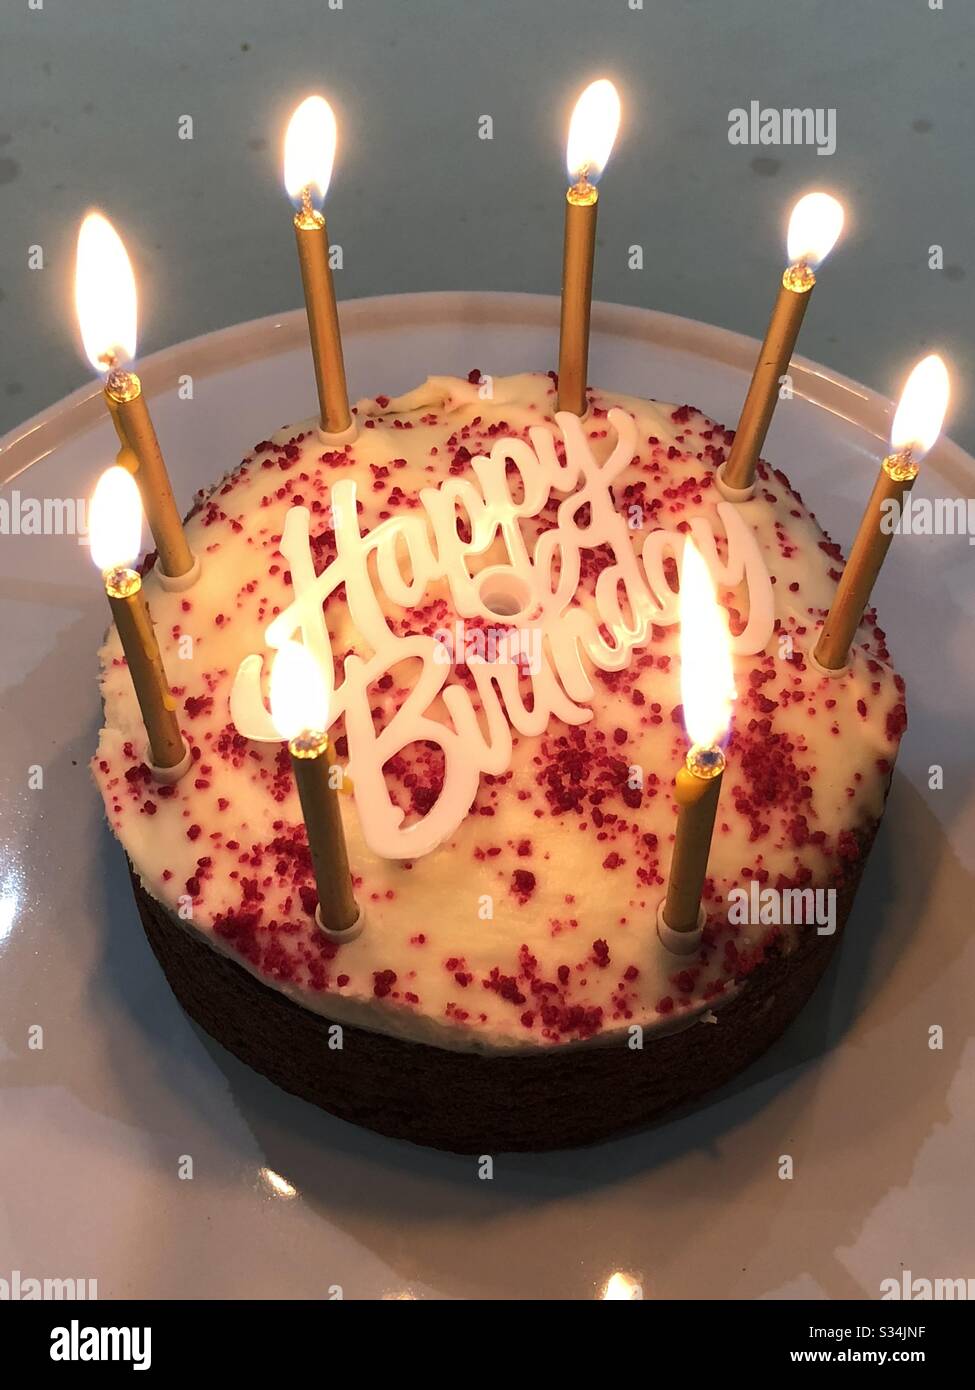 Happy birthday cake Stock Photo - Alamy